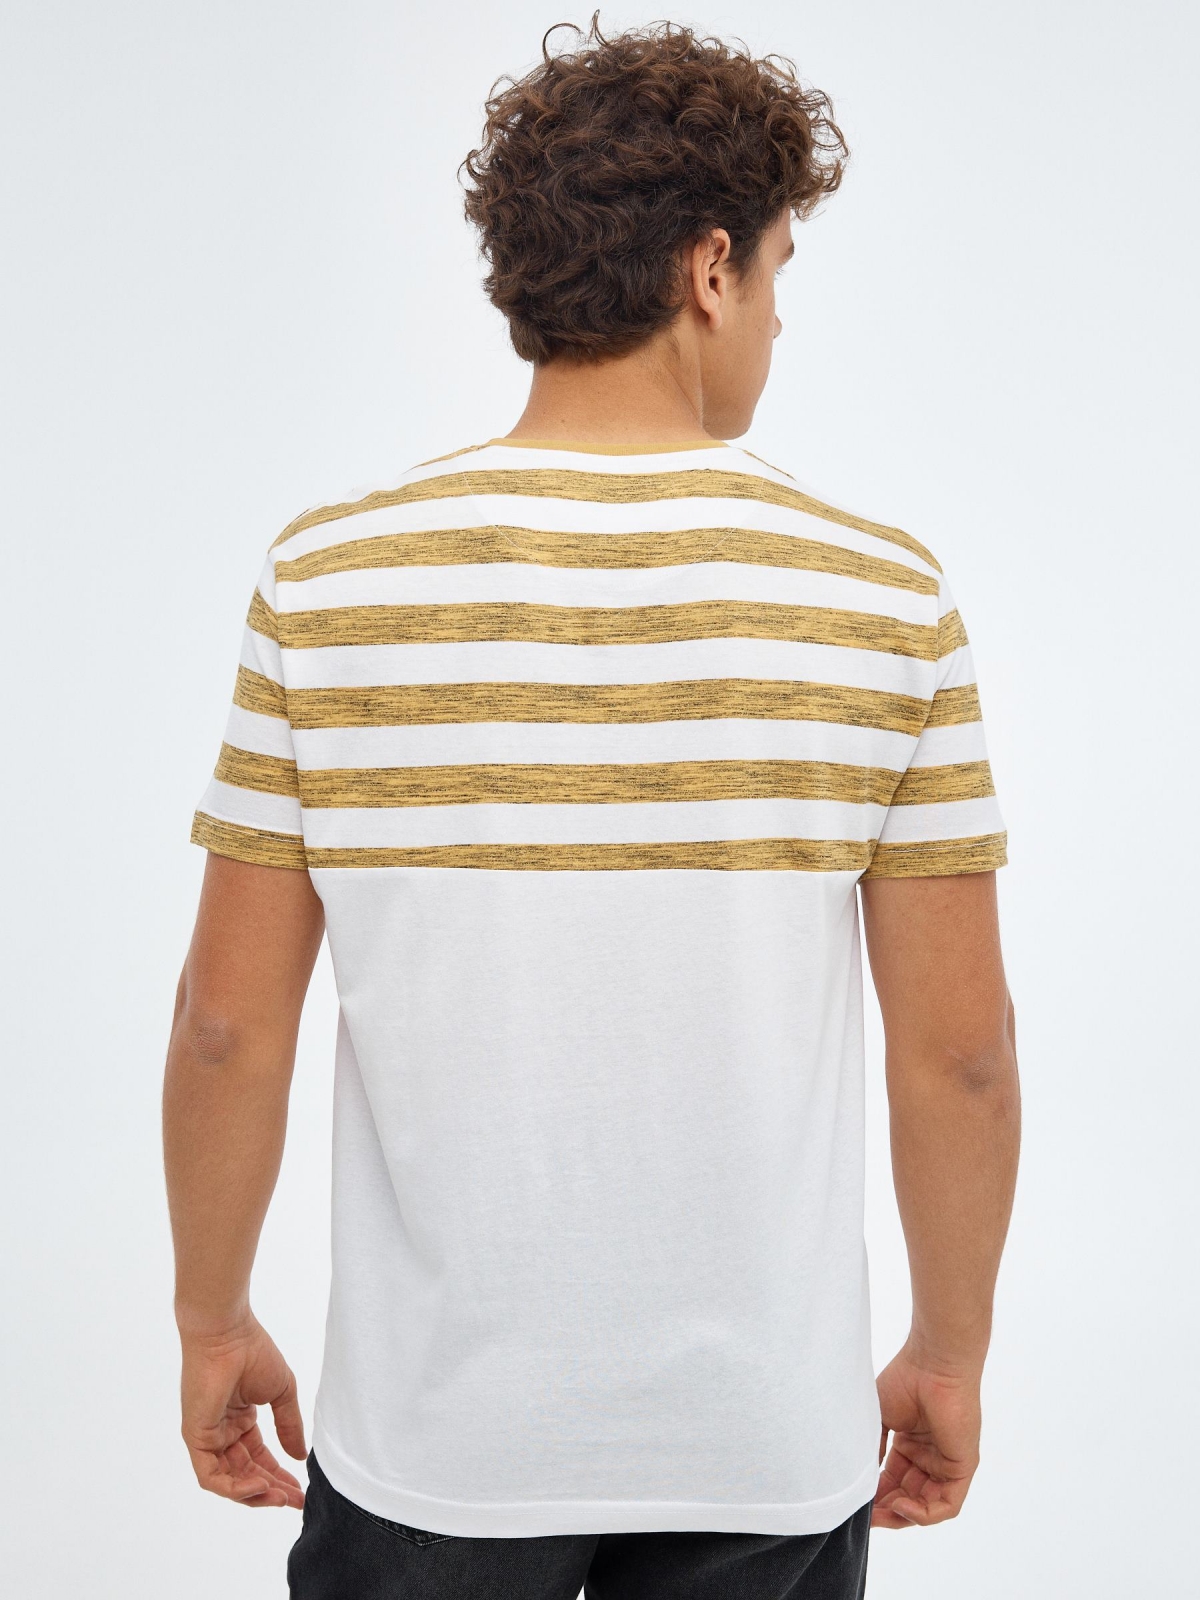 Camiseta de rayas y bolsillo amarillo vista media trasera